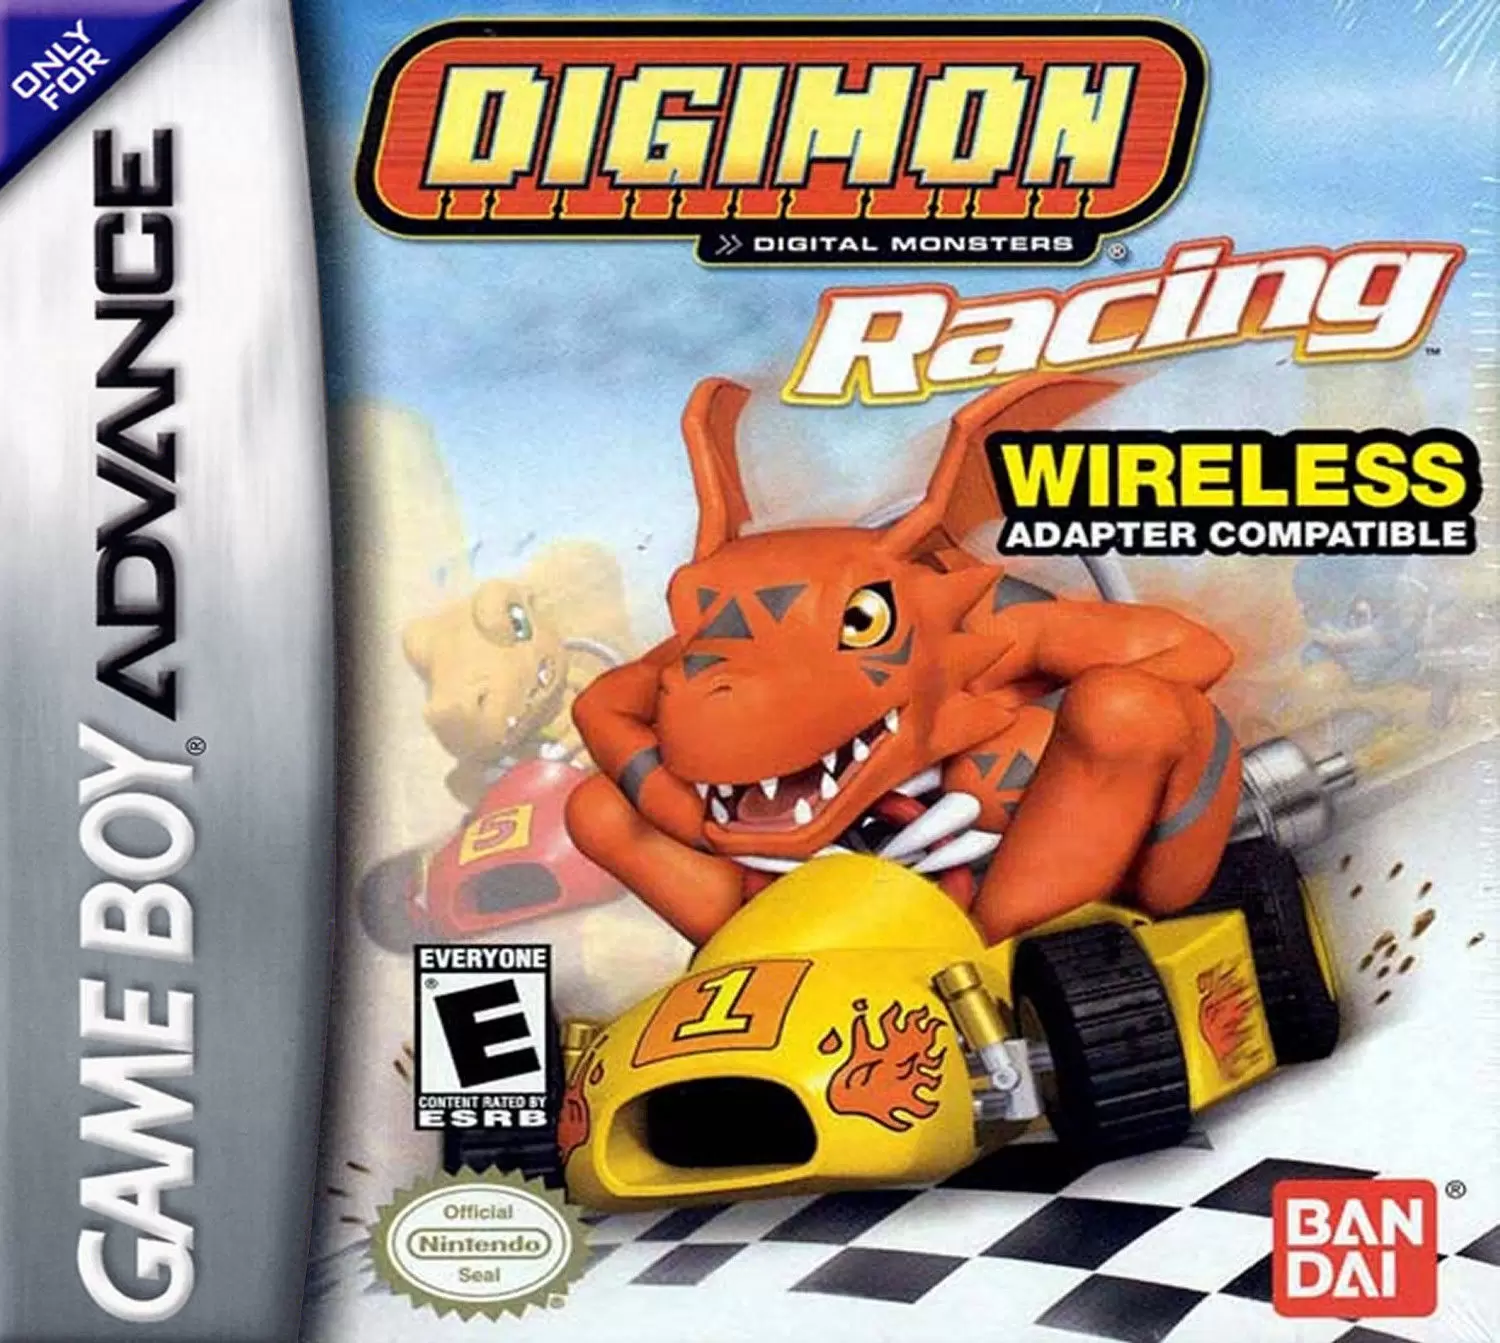 Game Boy Advance Games - Digimon Racing